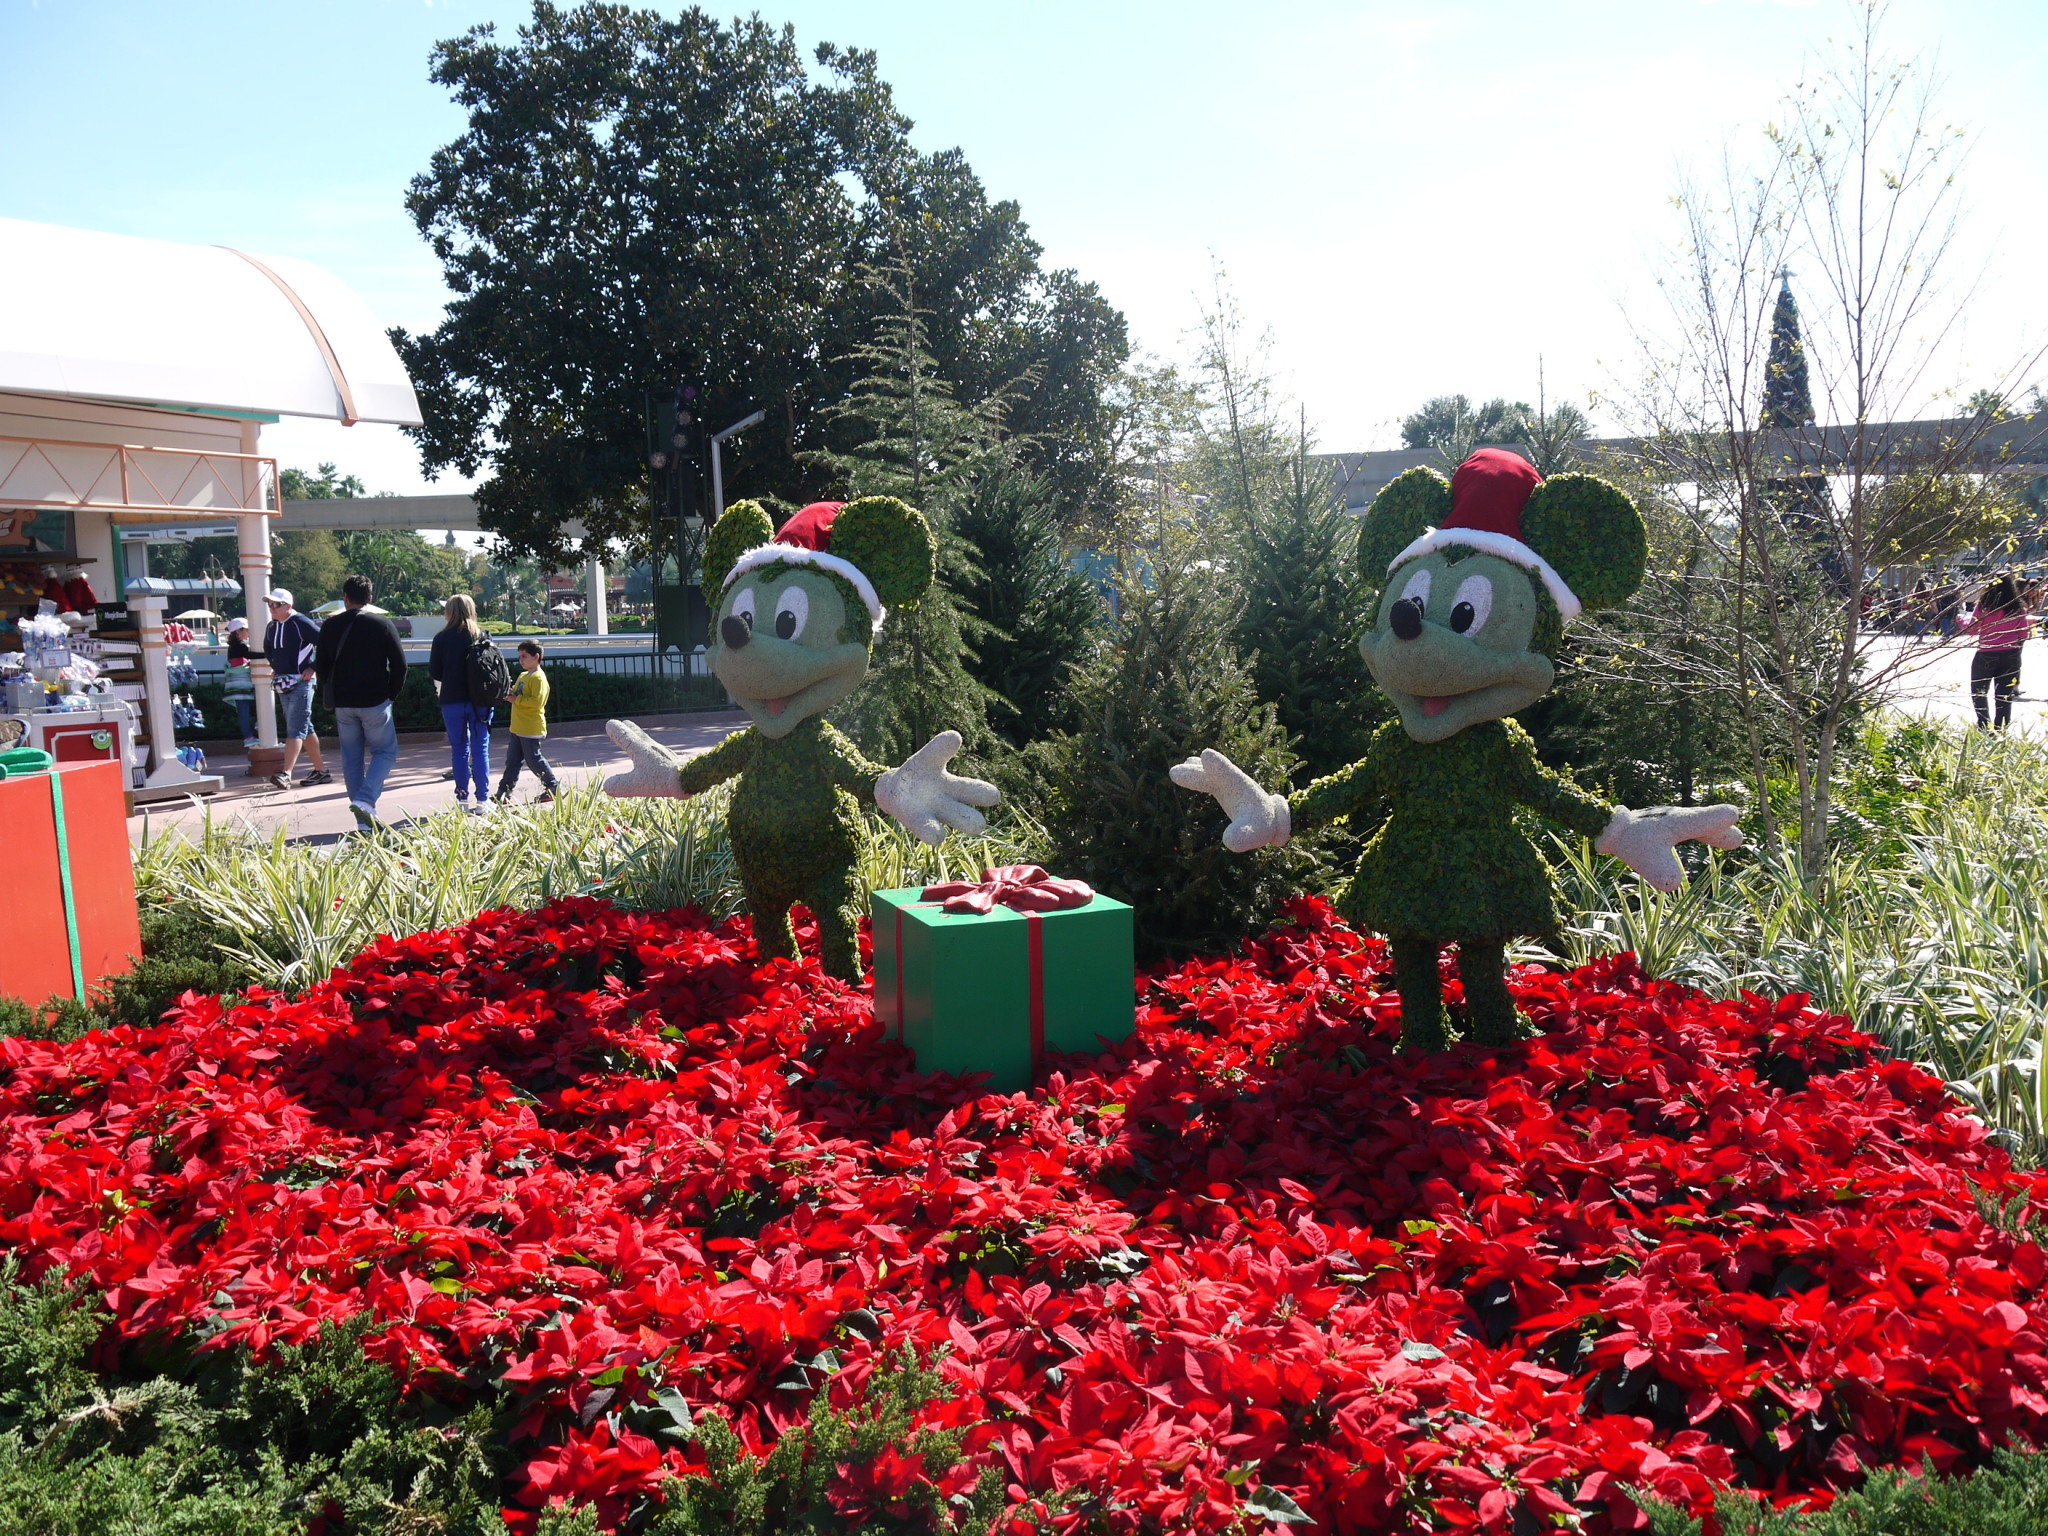 Holiday Entertainment Through Early January at Walt Disney World Resort